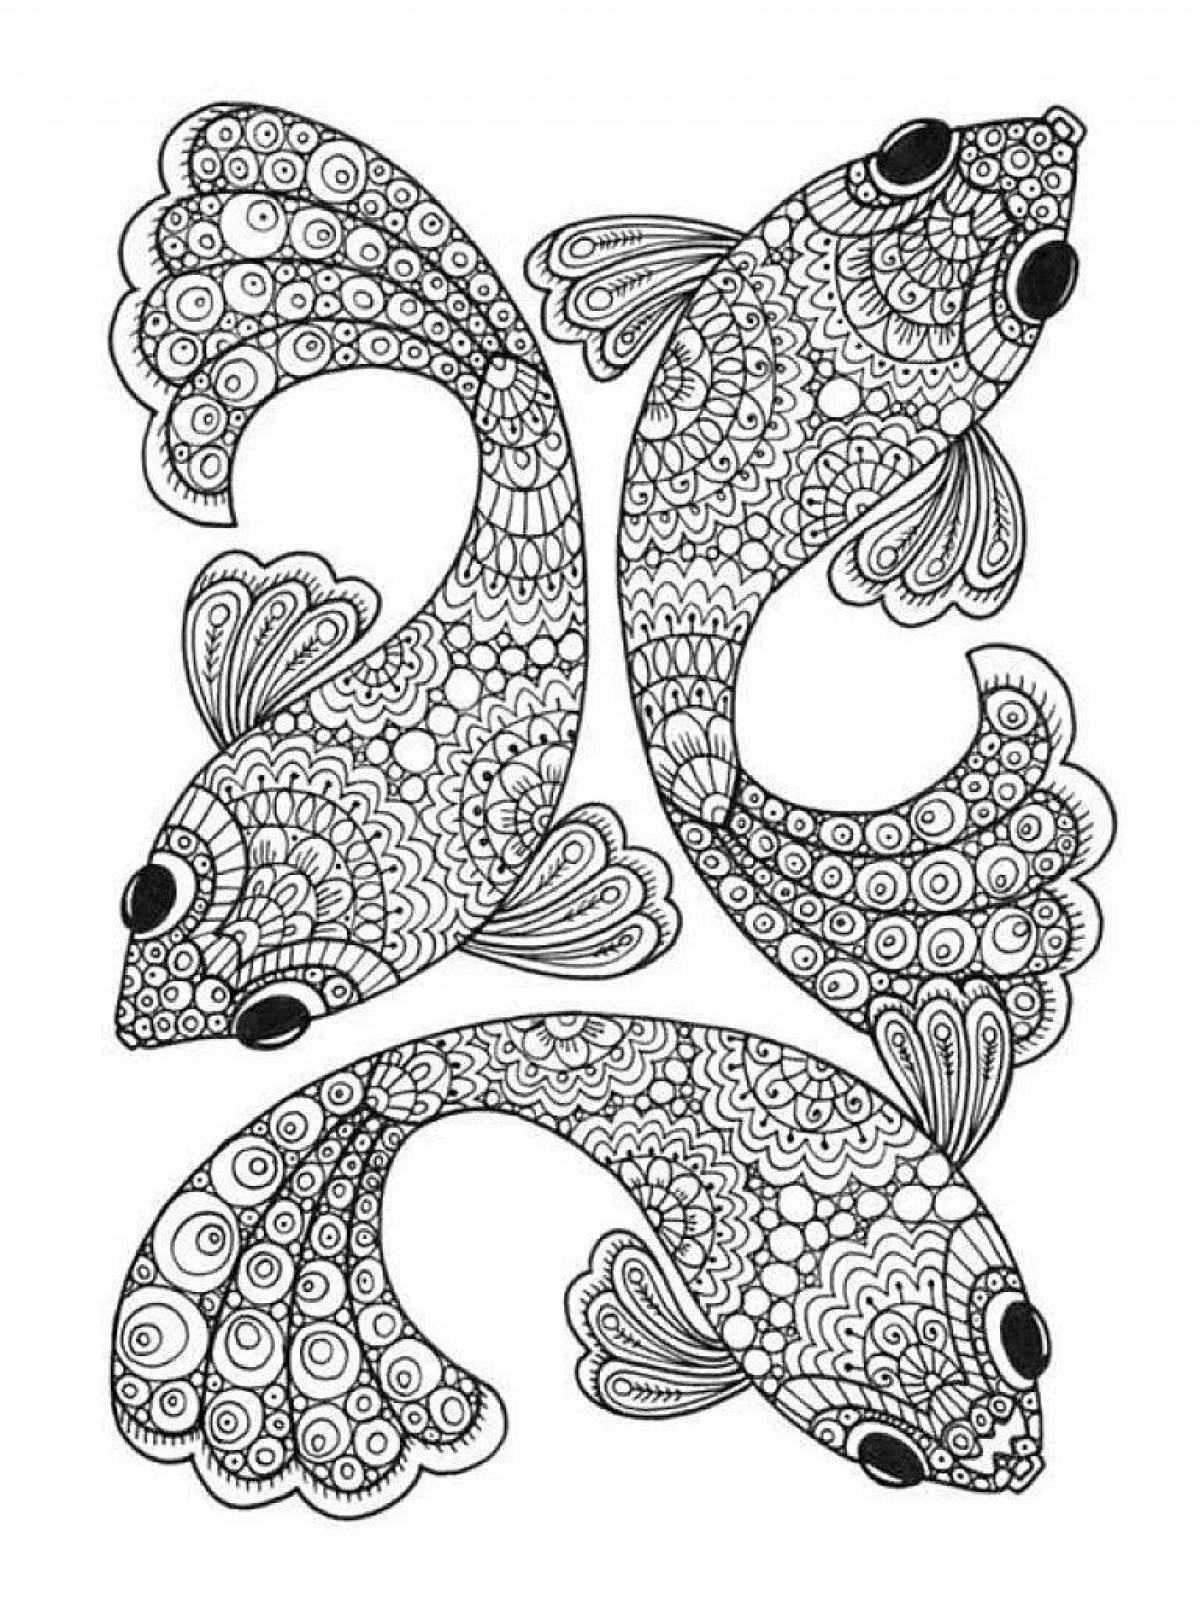 Bright anti-stress fish coloring book